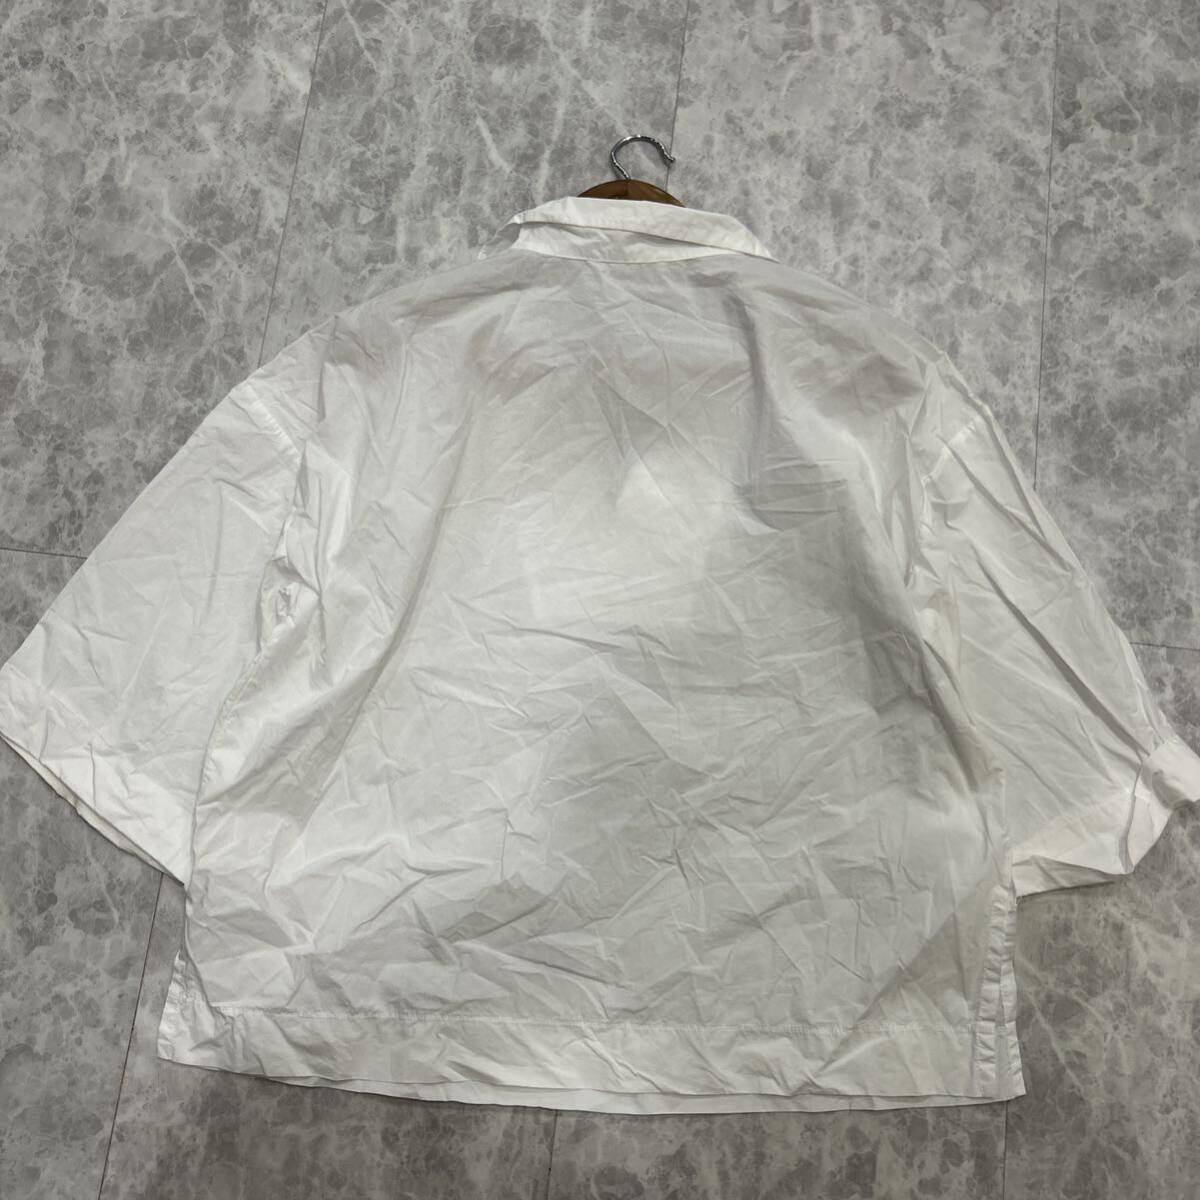 Z ■ 洗礼されたデザイン '人気モデル' PIETRO GRANDE ピエトログランデ 半袖 COTTON プルオーバー シャツ / ブラウス 40 婦人服 トップス の画像3